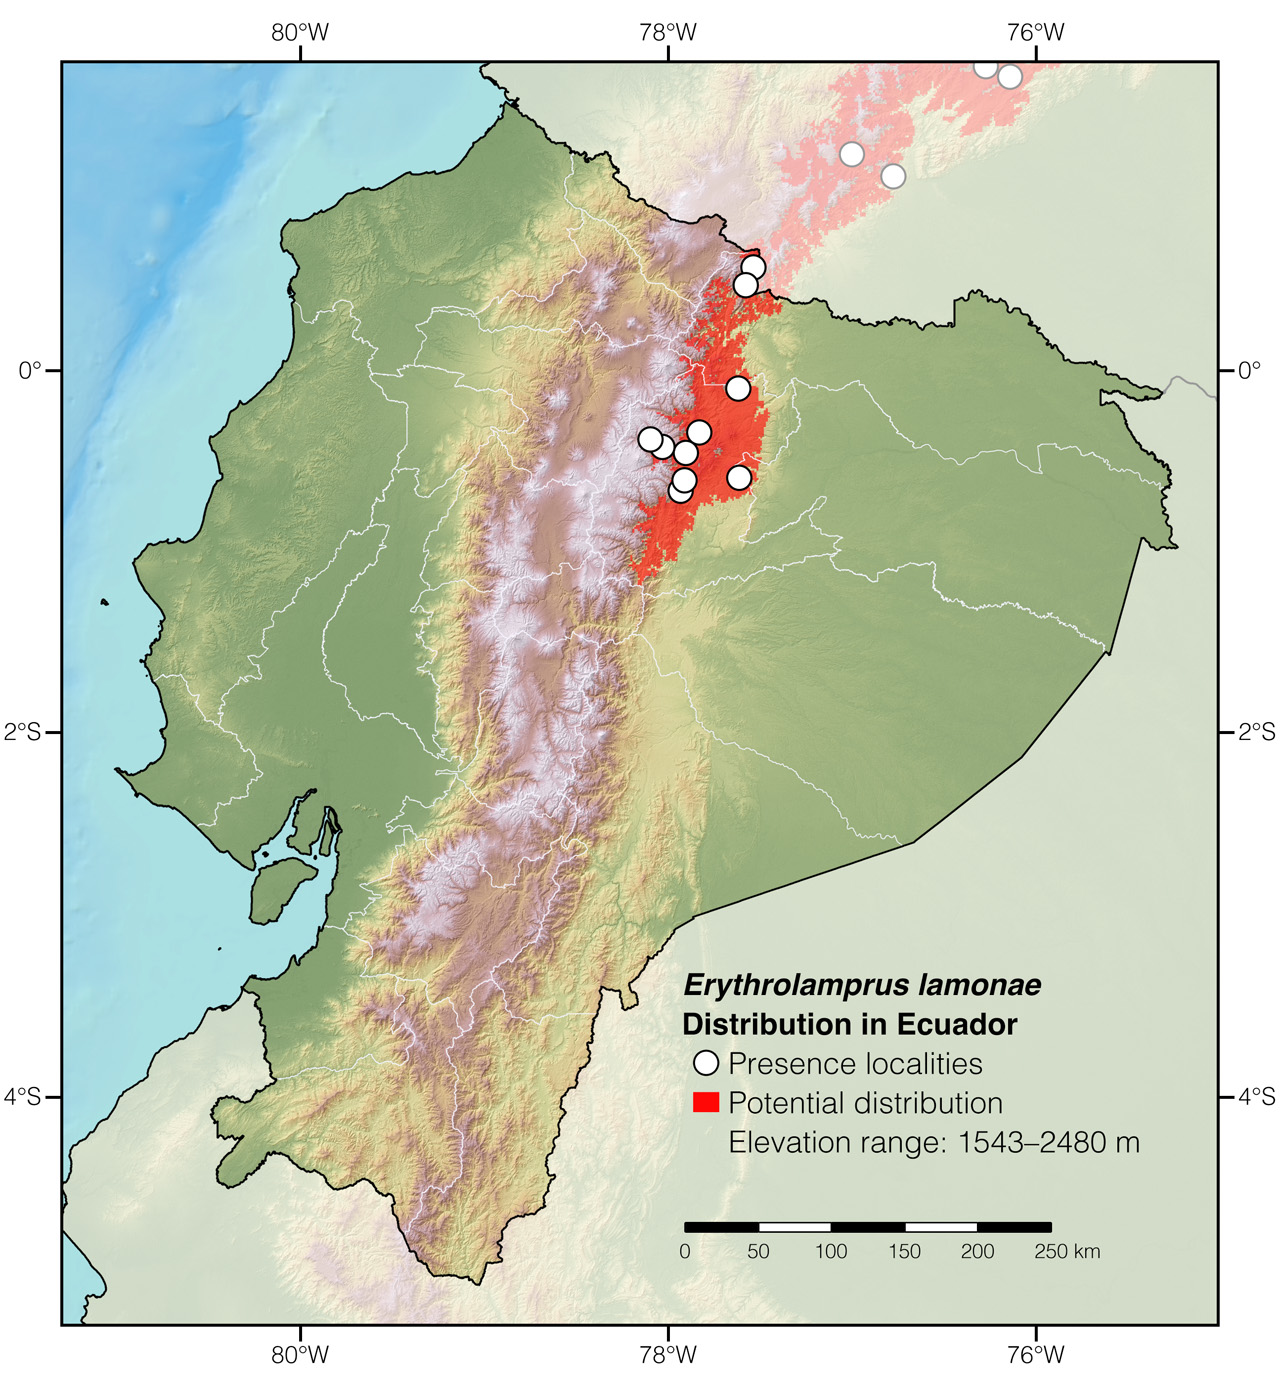 Distribution of Erythrolamprus lamonae in Ecuador